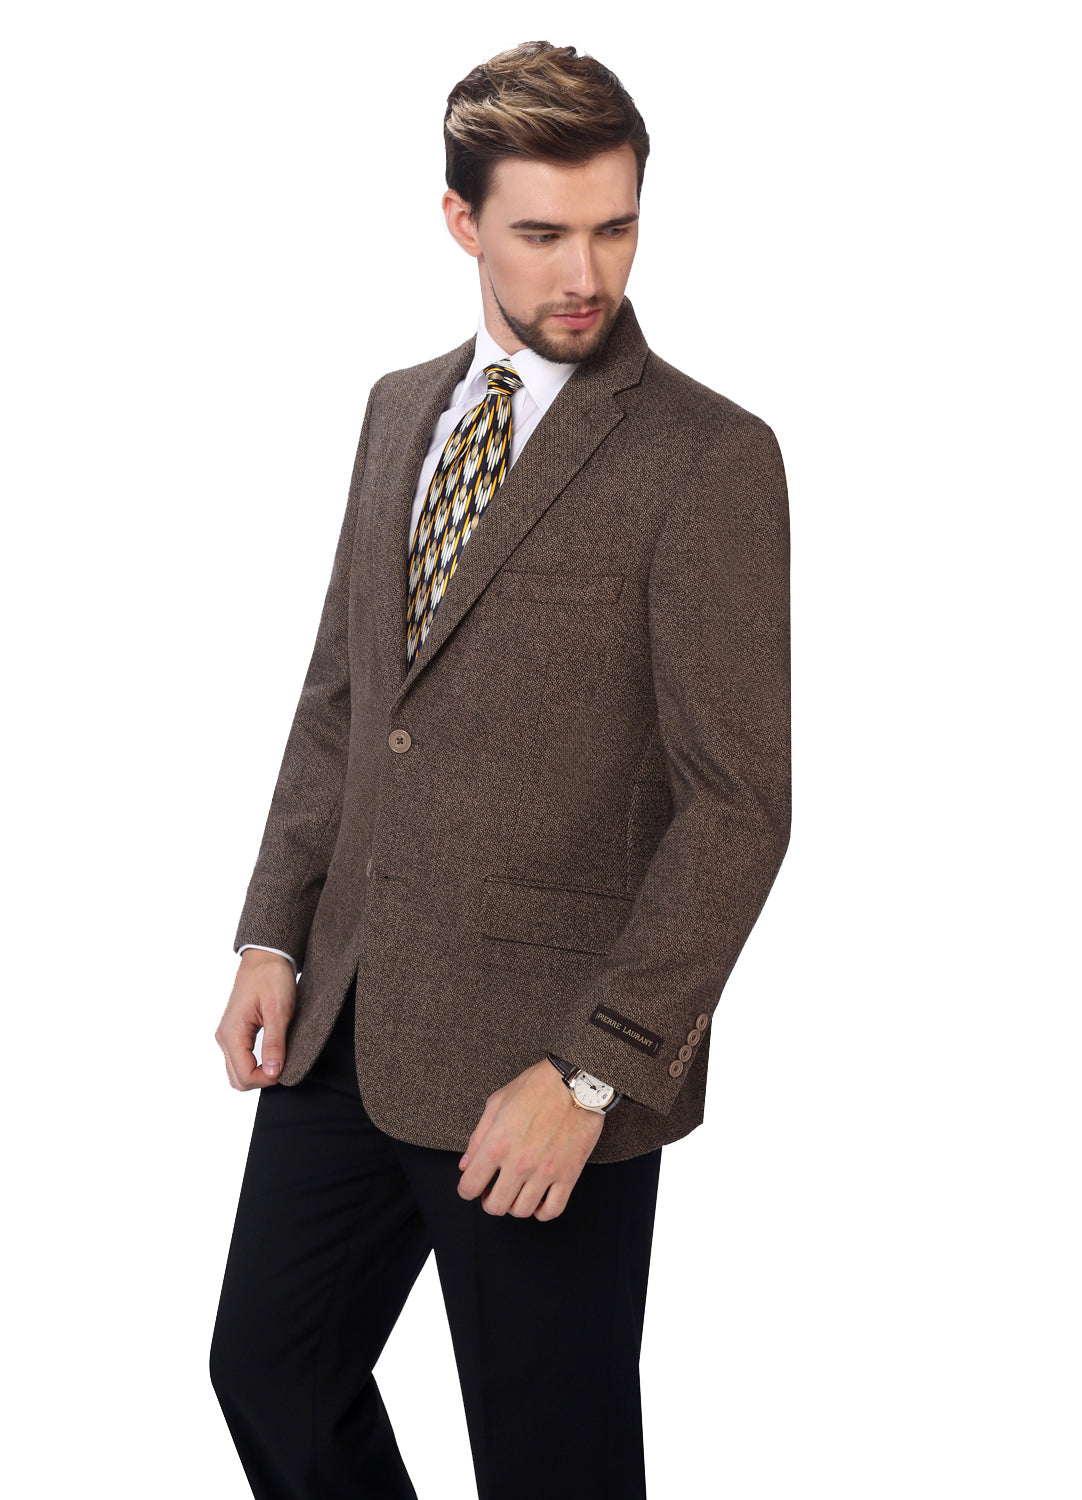 Men's Tweed Blazer Classic Fit Wool Blend Sport Coat 2 Button Jacket